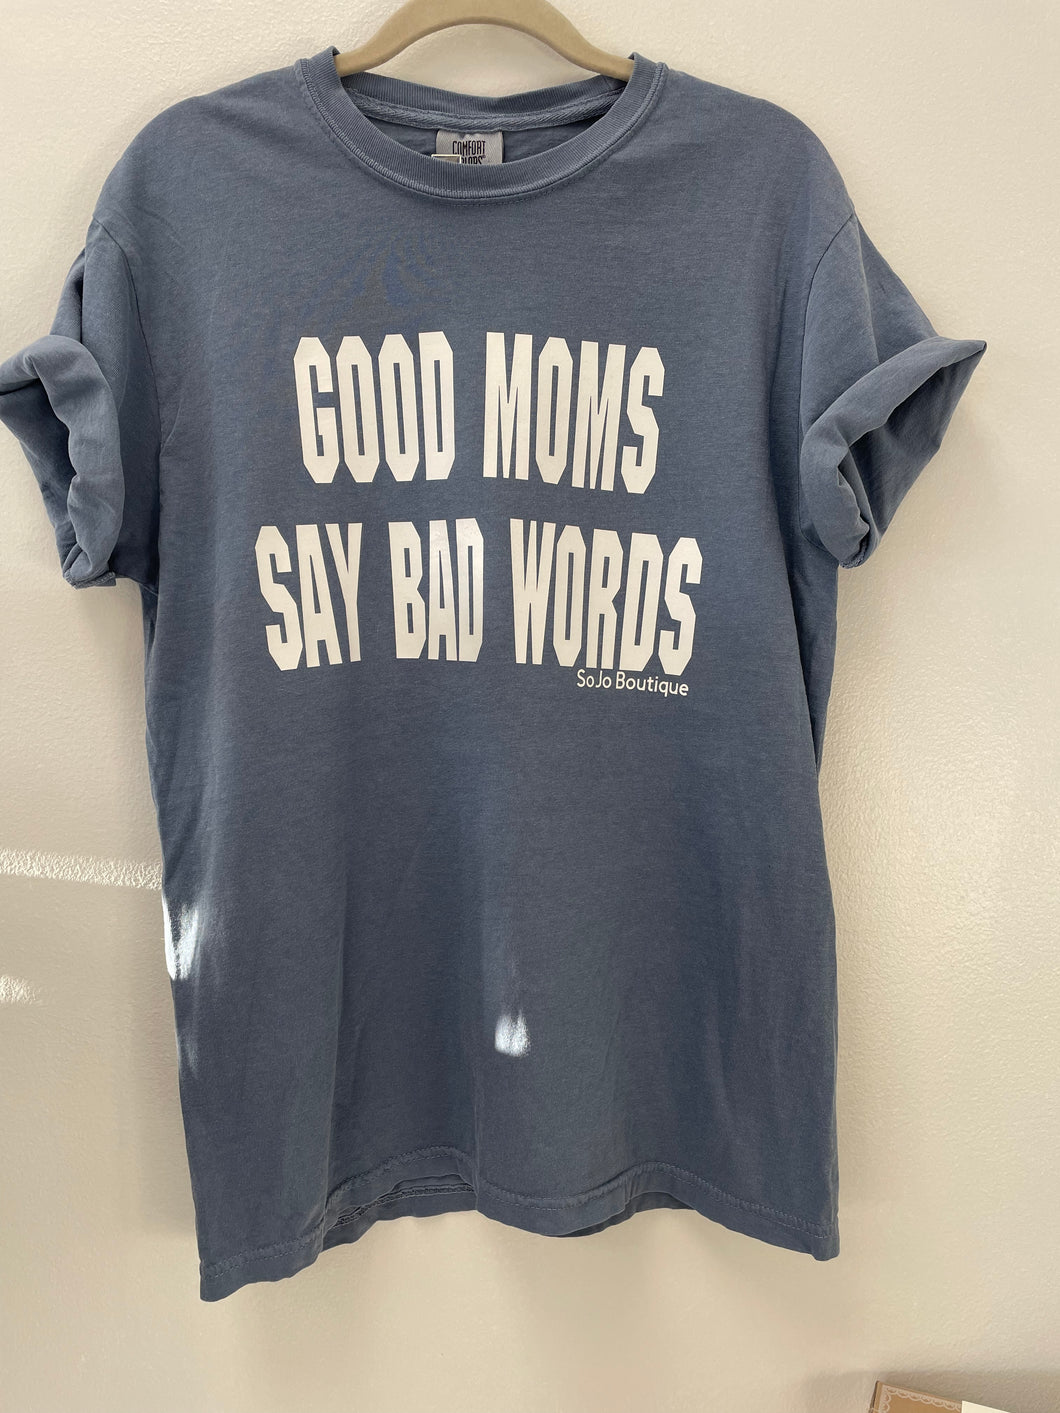 Mom shirts with fun sayings